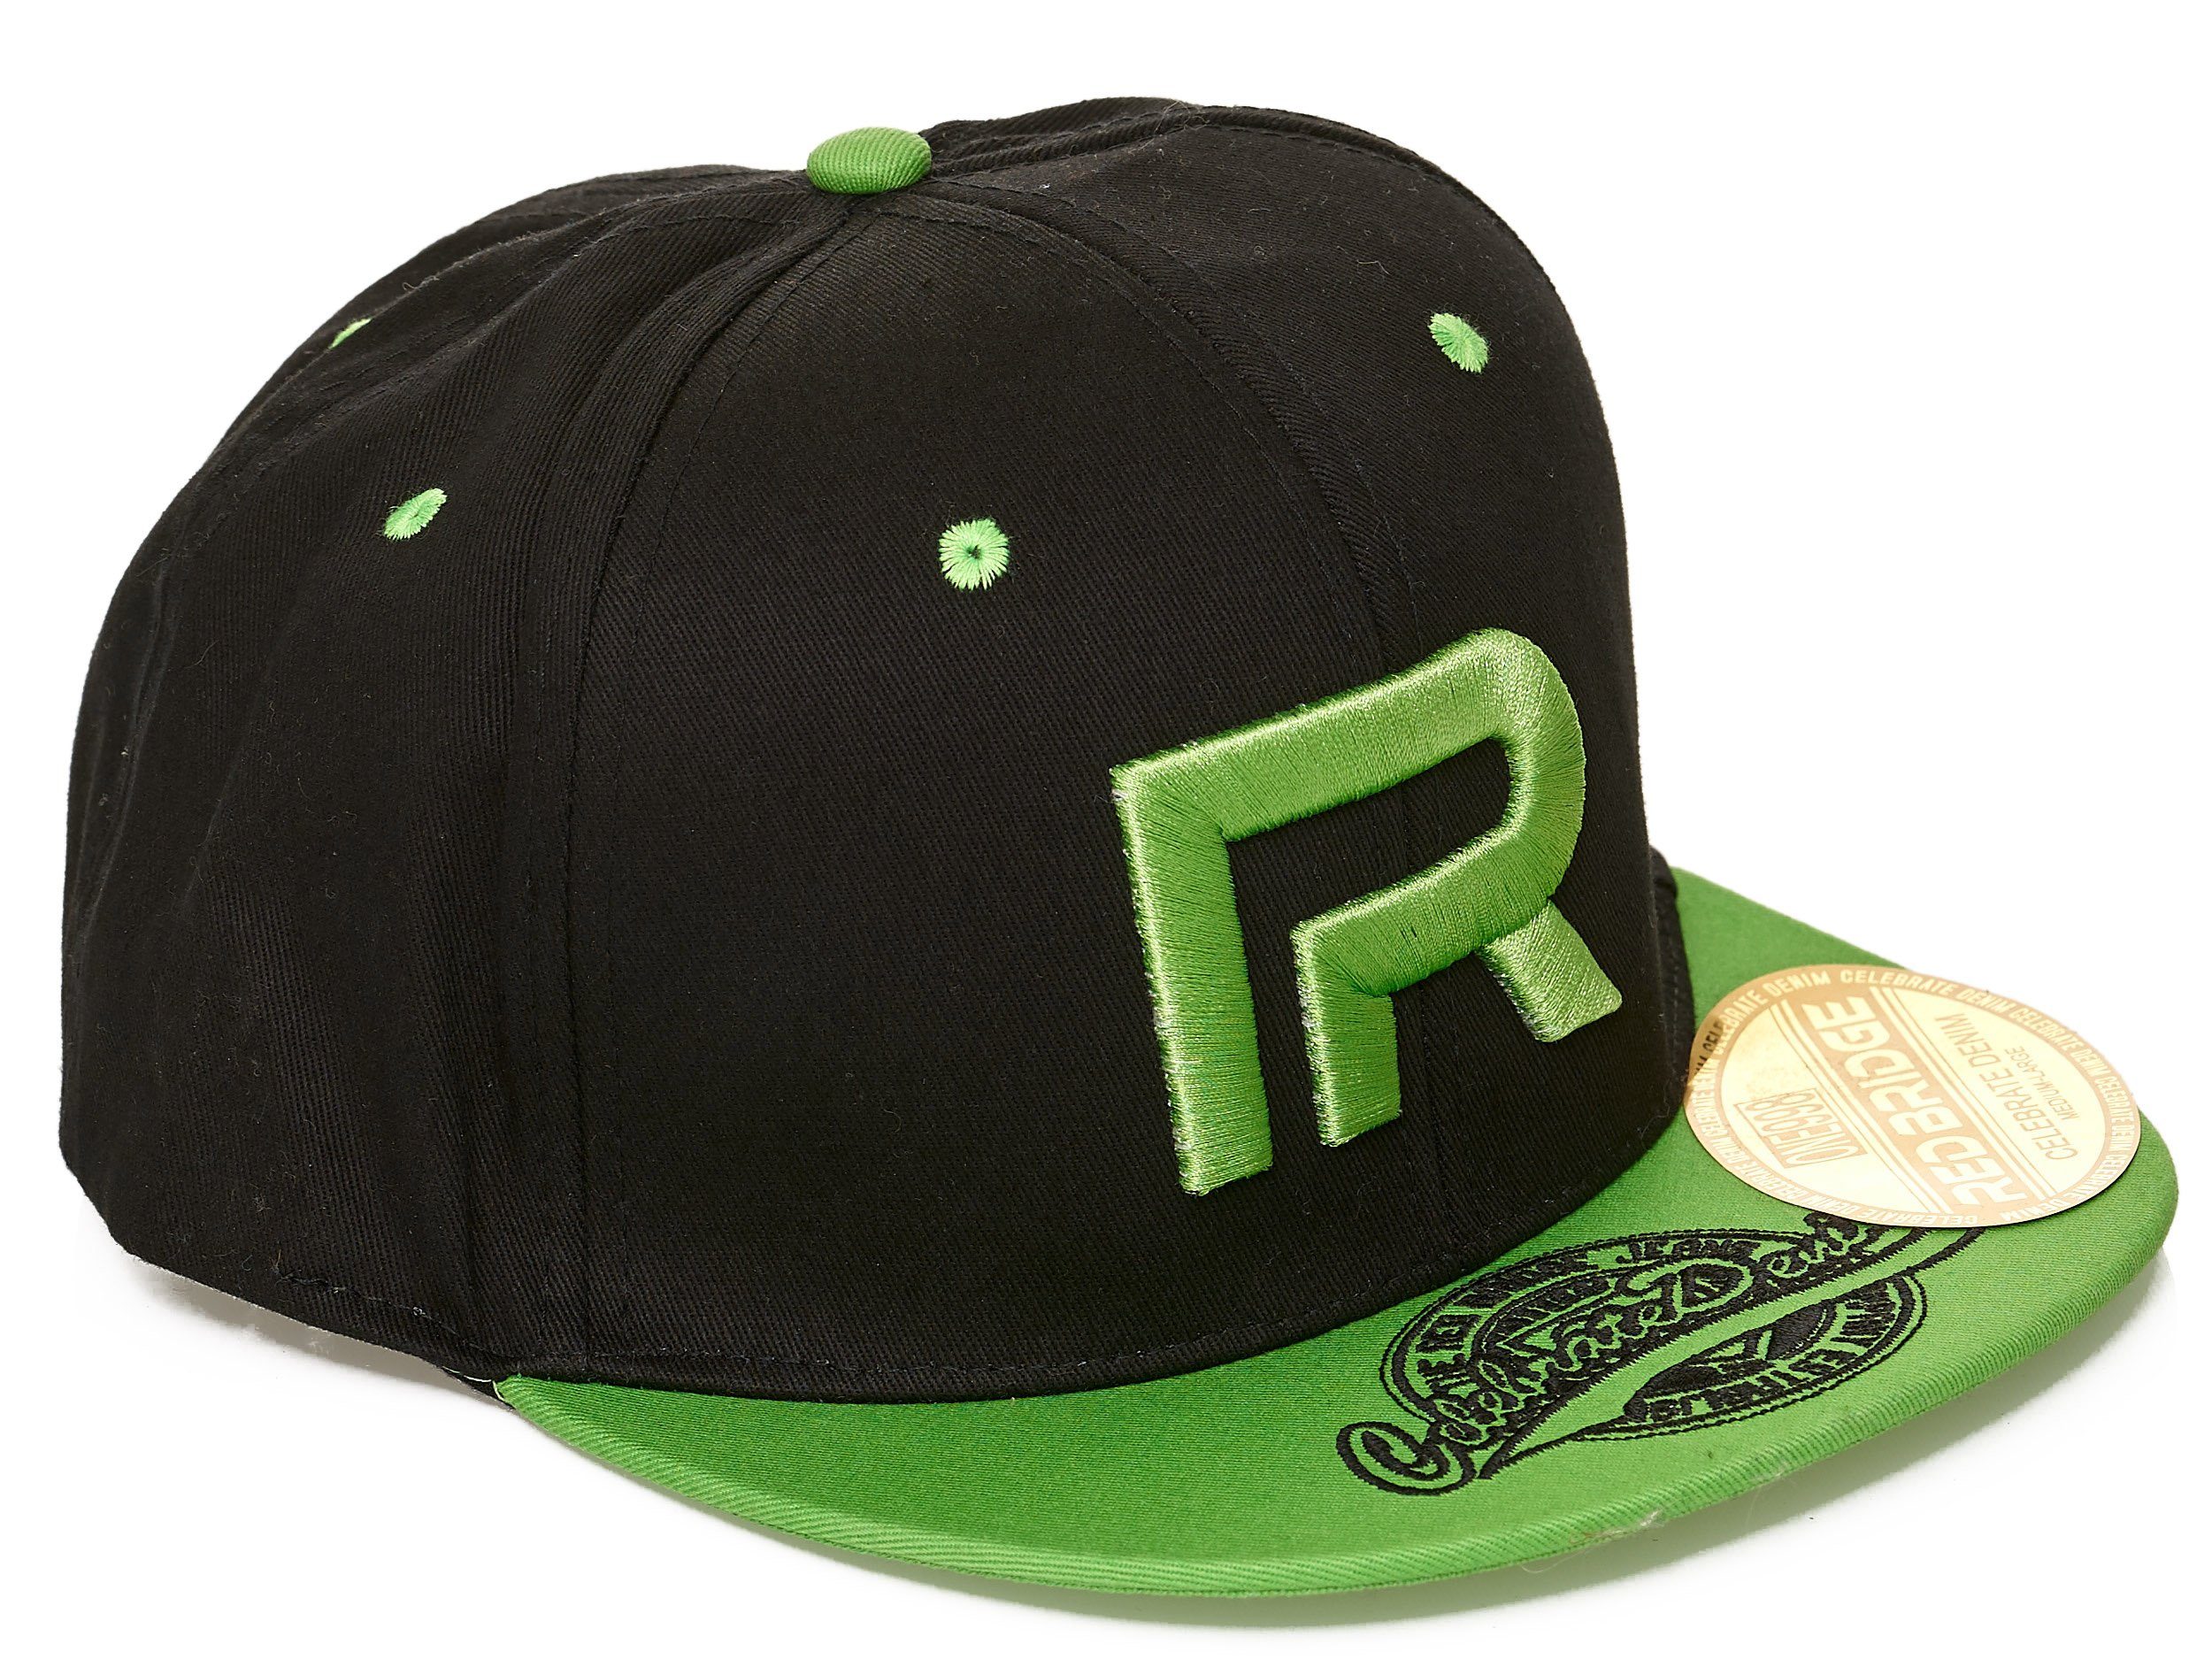 RedBridge Baseball Cap schwarz-grün mit Wellingborough Druckverschluss